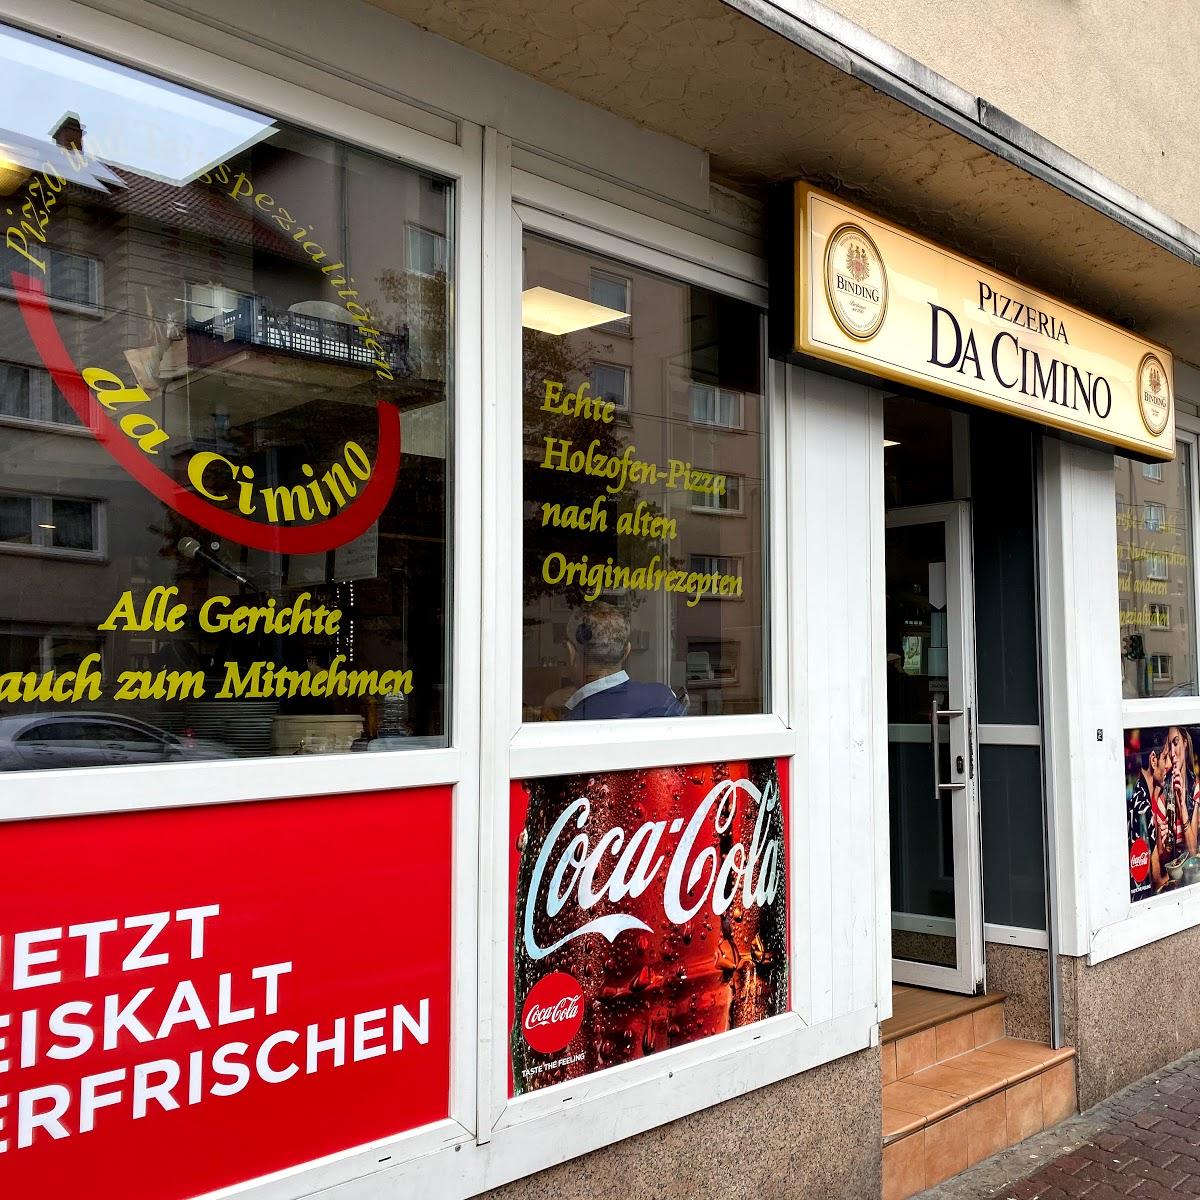 Restaurant "Da Cimino" in Frankfurt am Main